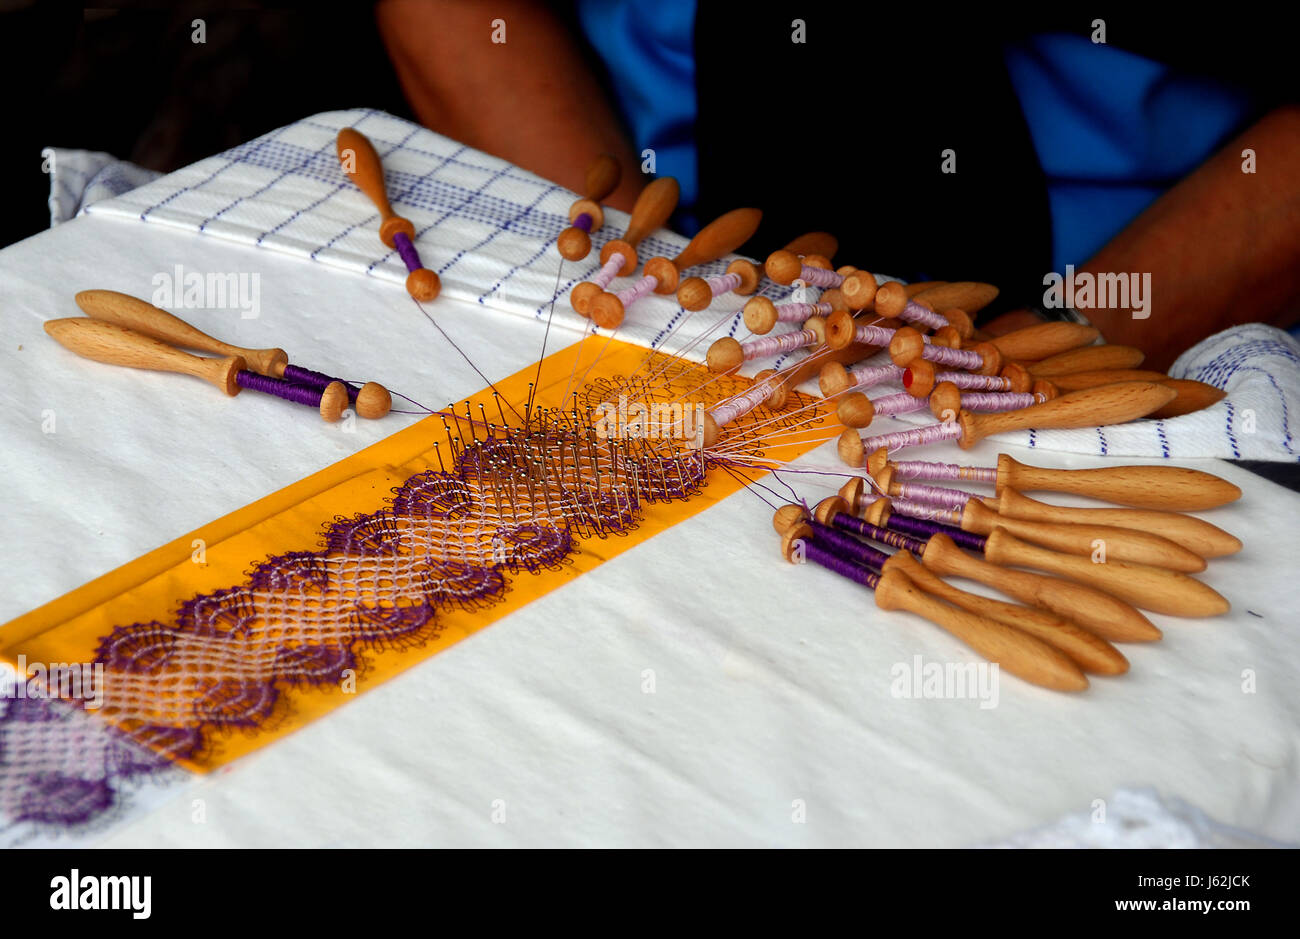 blanket clapper handicraft lace-making doily yarn handiworks woman hand hands Stock Photo